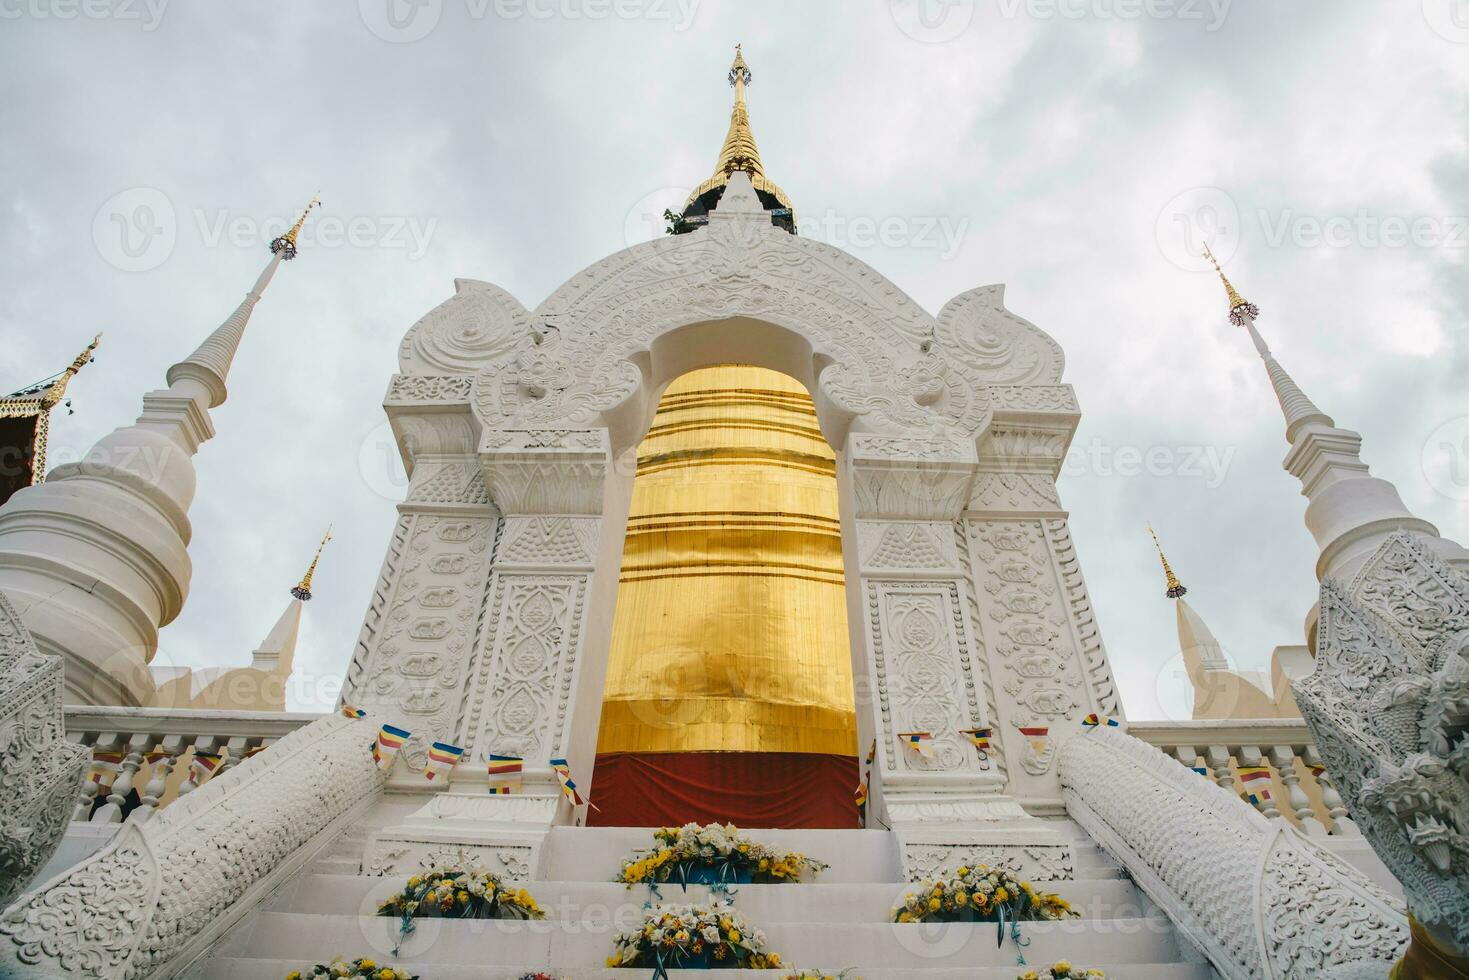 de gyllene buddist pagod i wat suan dok detta Viktig kloster stadgar ett halv av en helig buddha reliker i chiang mai provins av thailand. foto